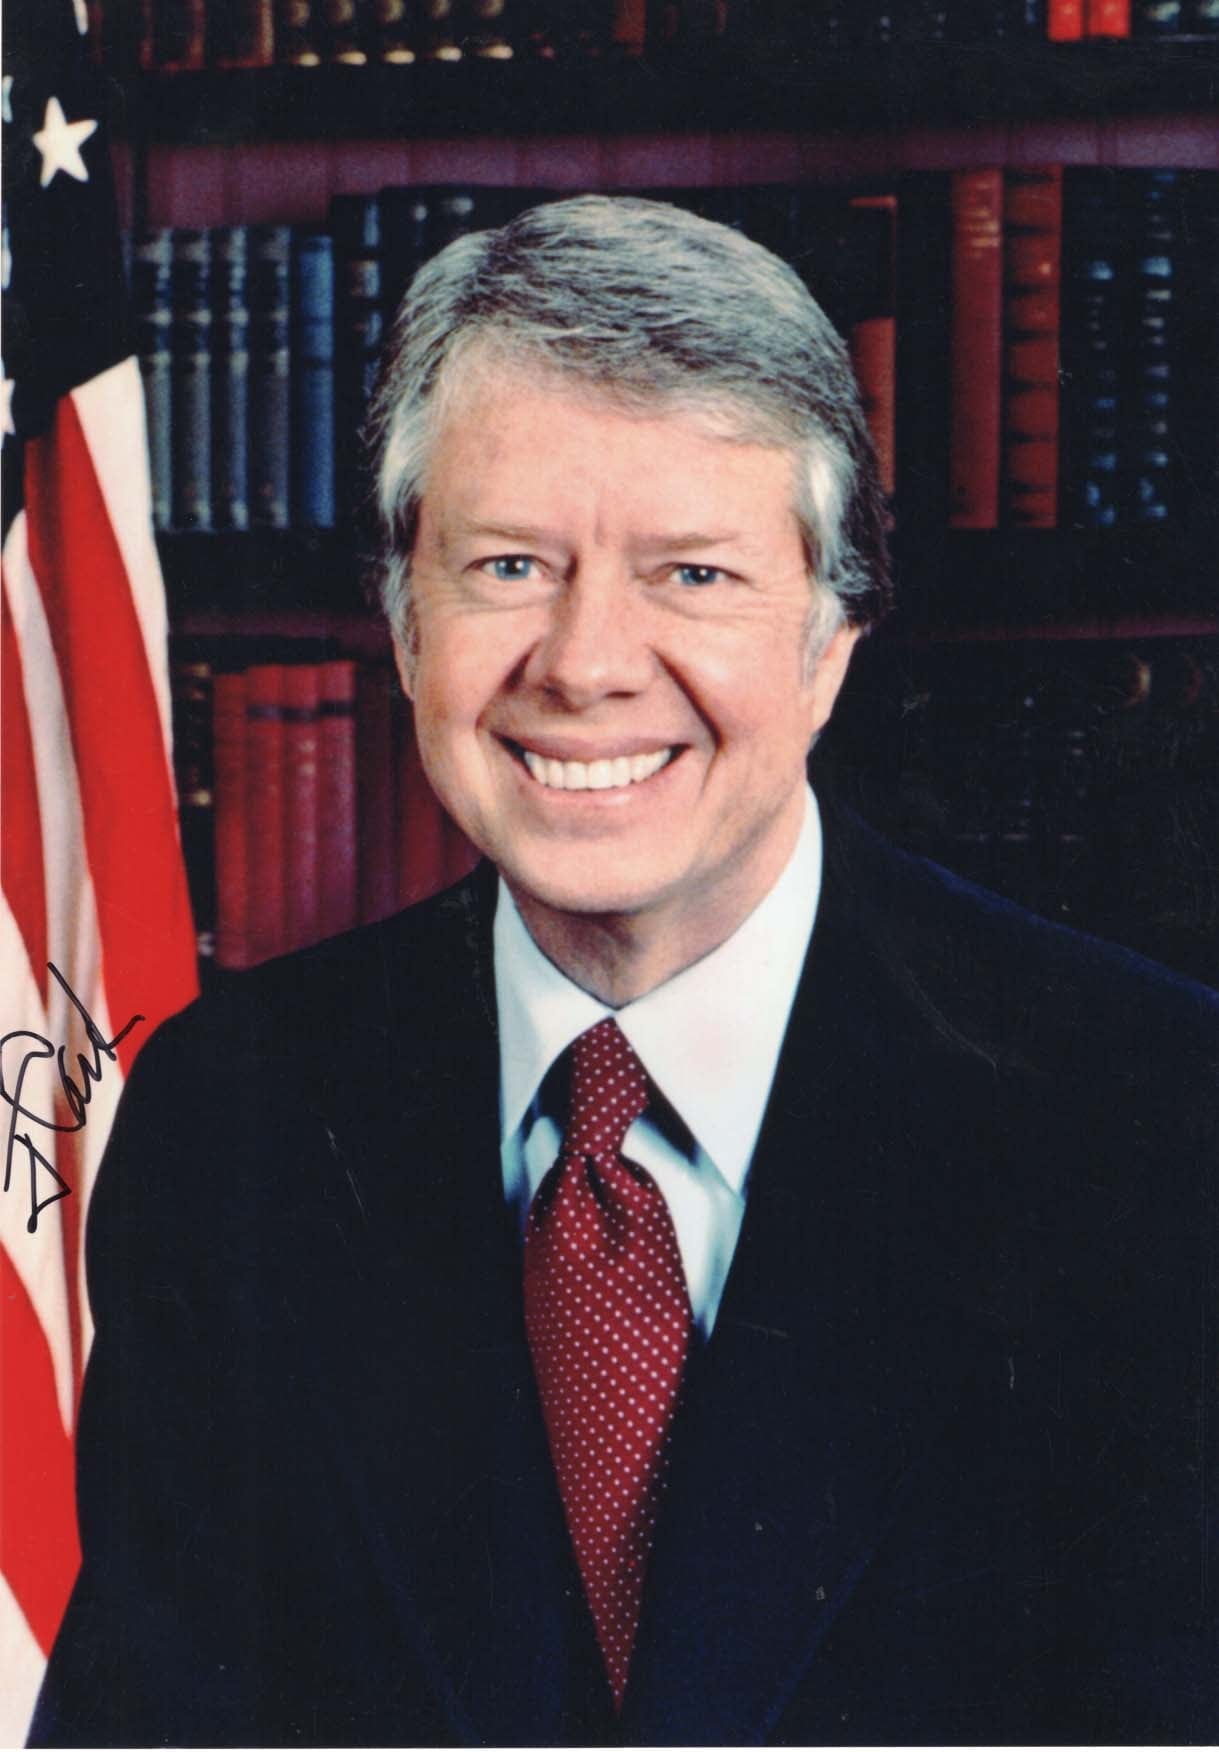 Jimmy Carter Autograph Autogramm | ID 8251535229077